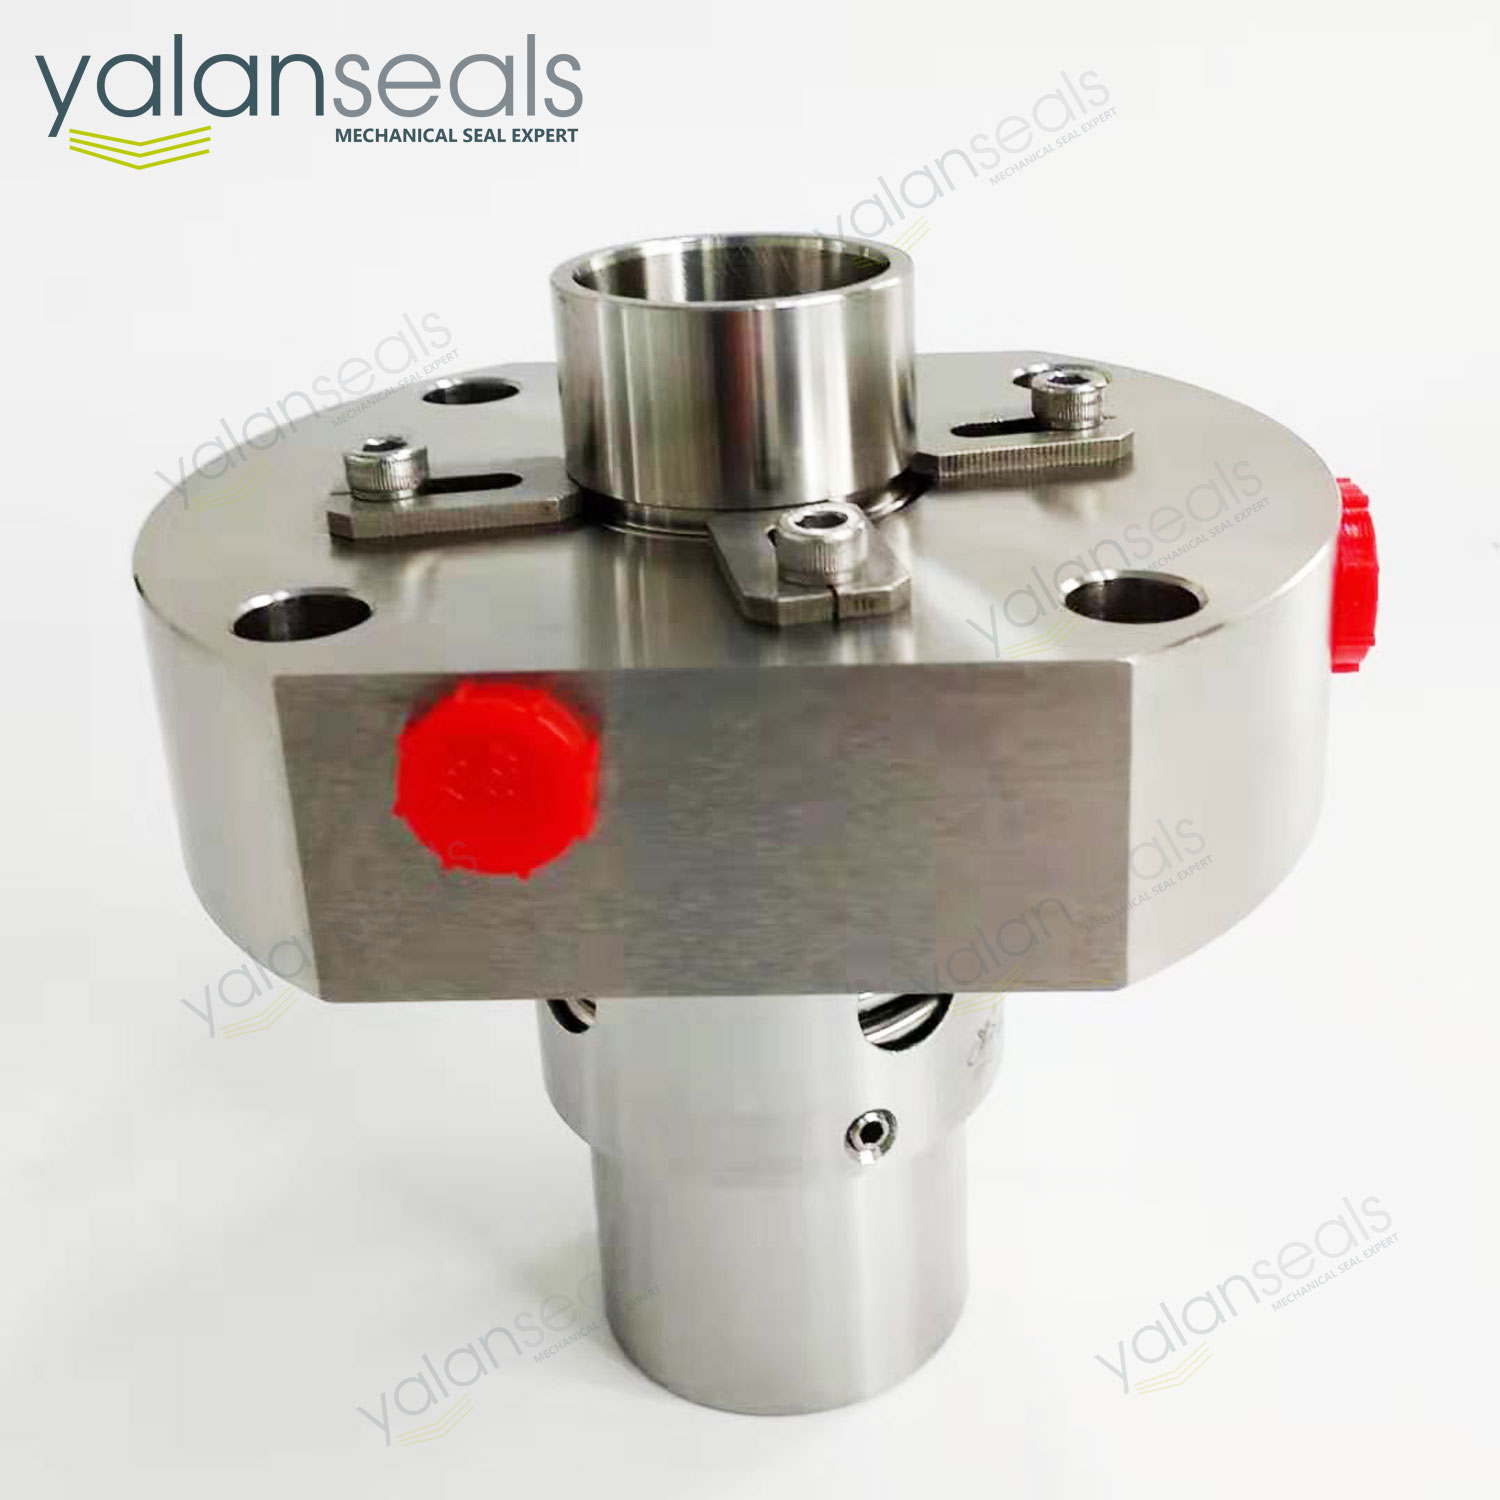 C11BJ Single Spring Balanced Cartridge Mechanical Seal for Chemical Processing Pumps